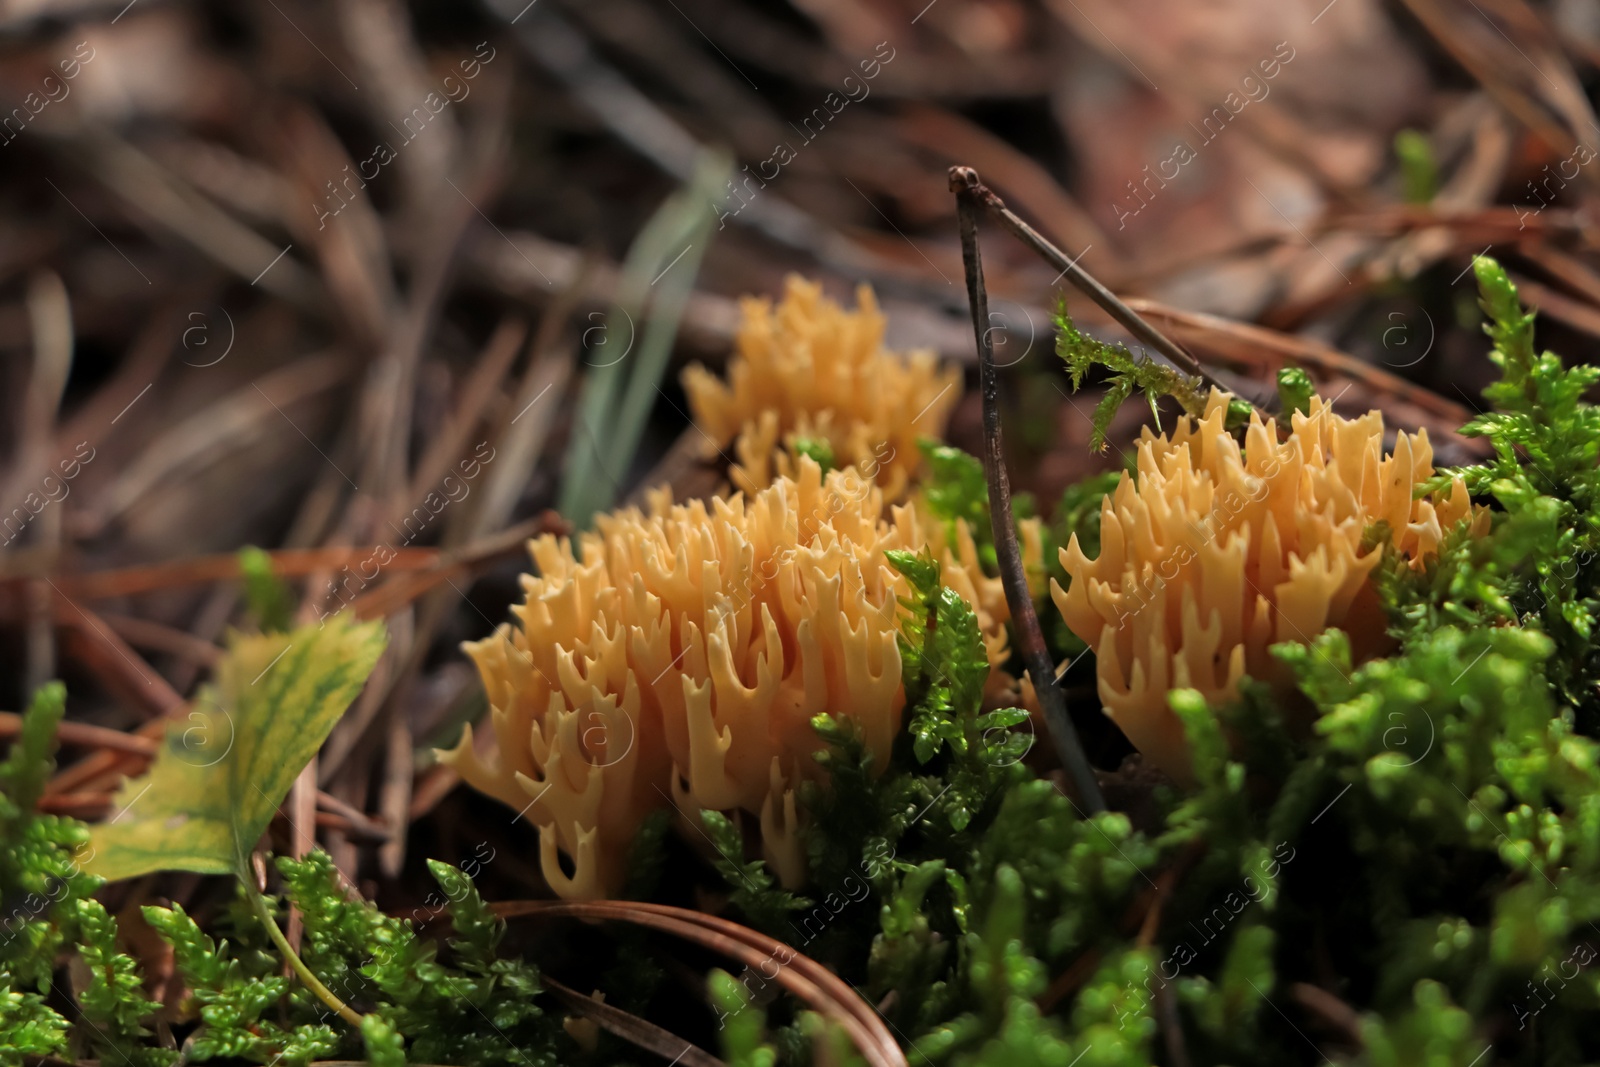 Photo of Ramaria flava mushrooms growing in forest, closeup